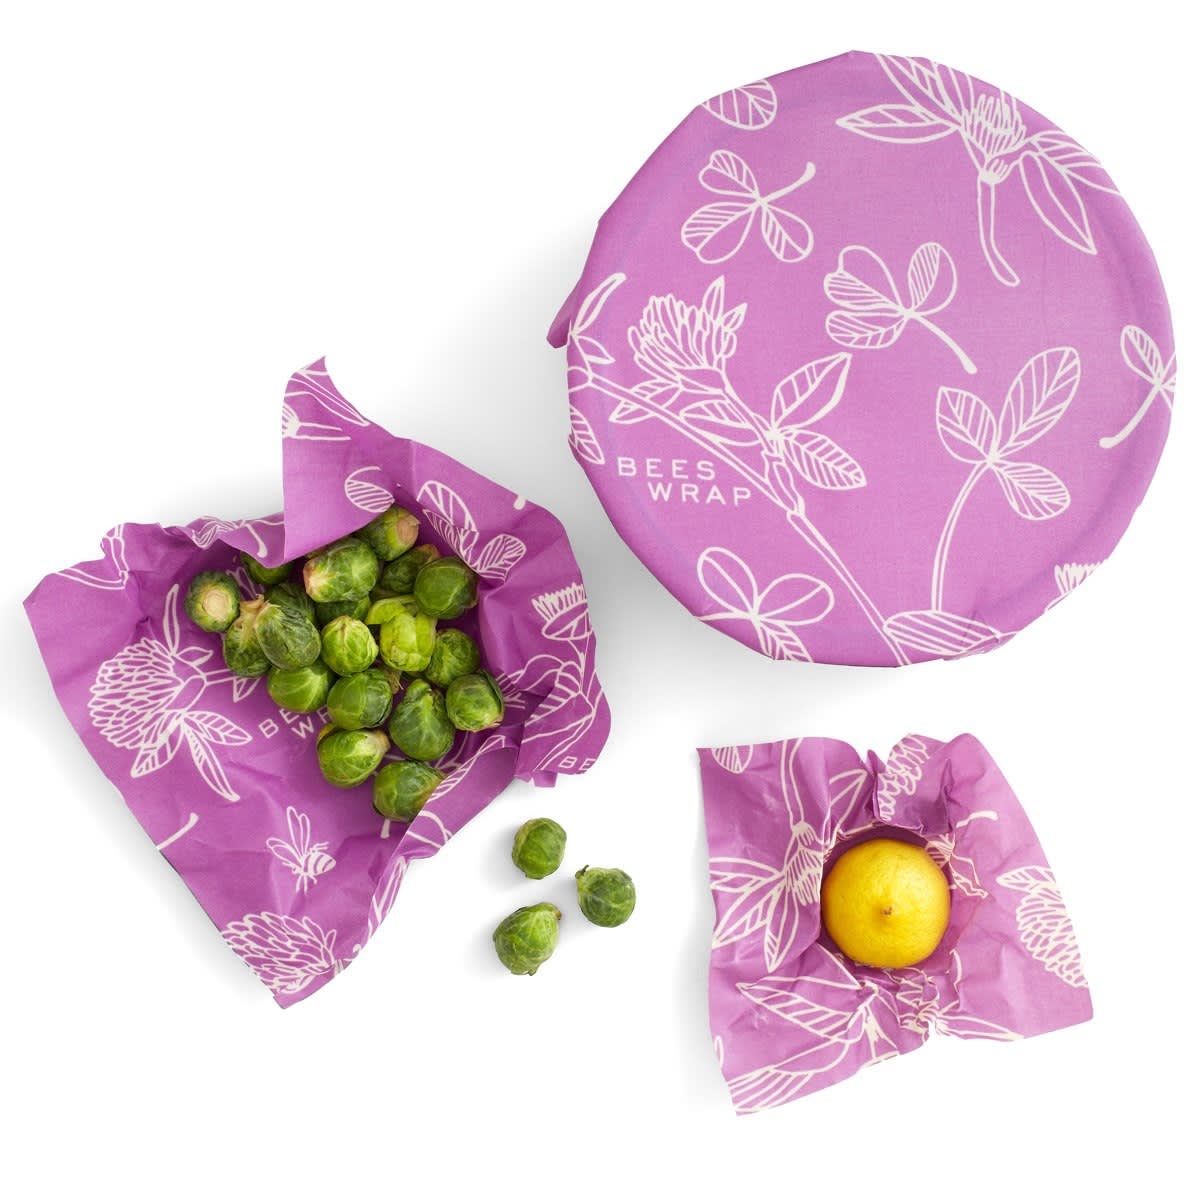 Bee's wrap 3-pack - Mimi's purple